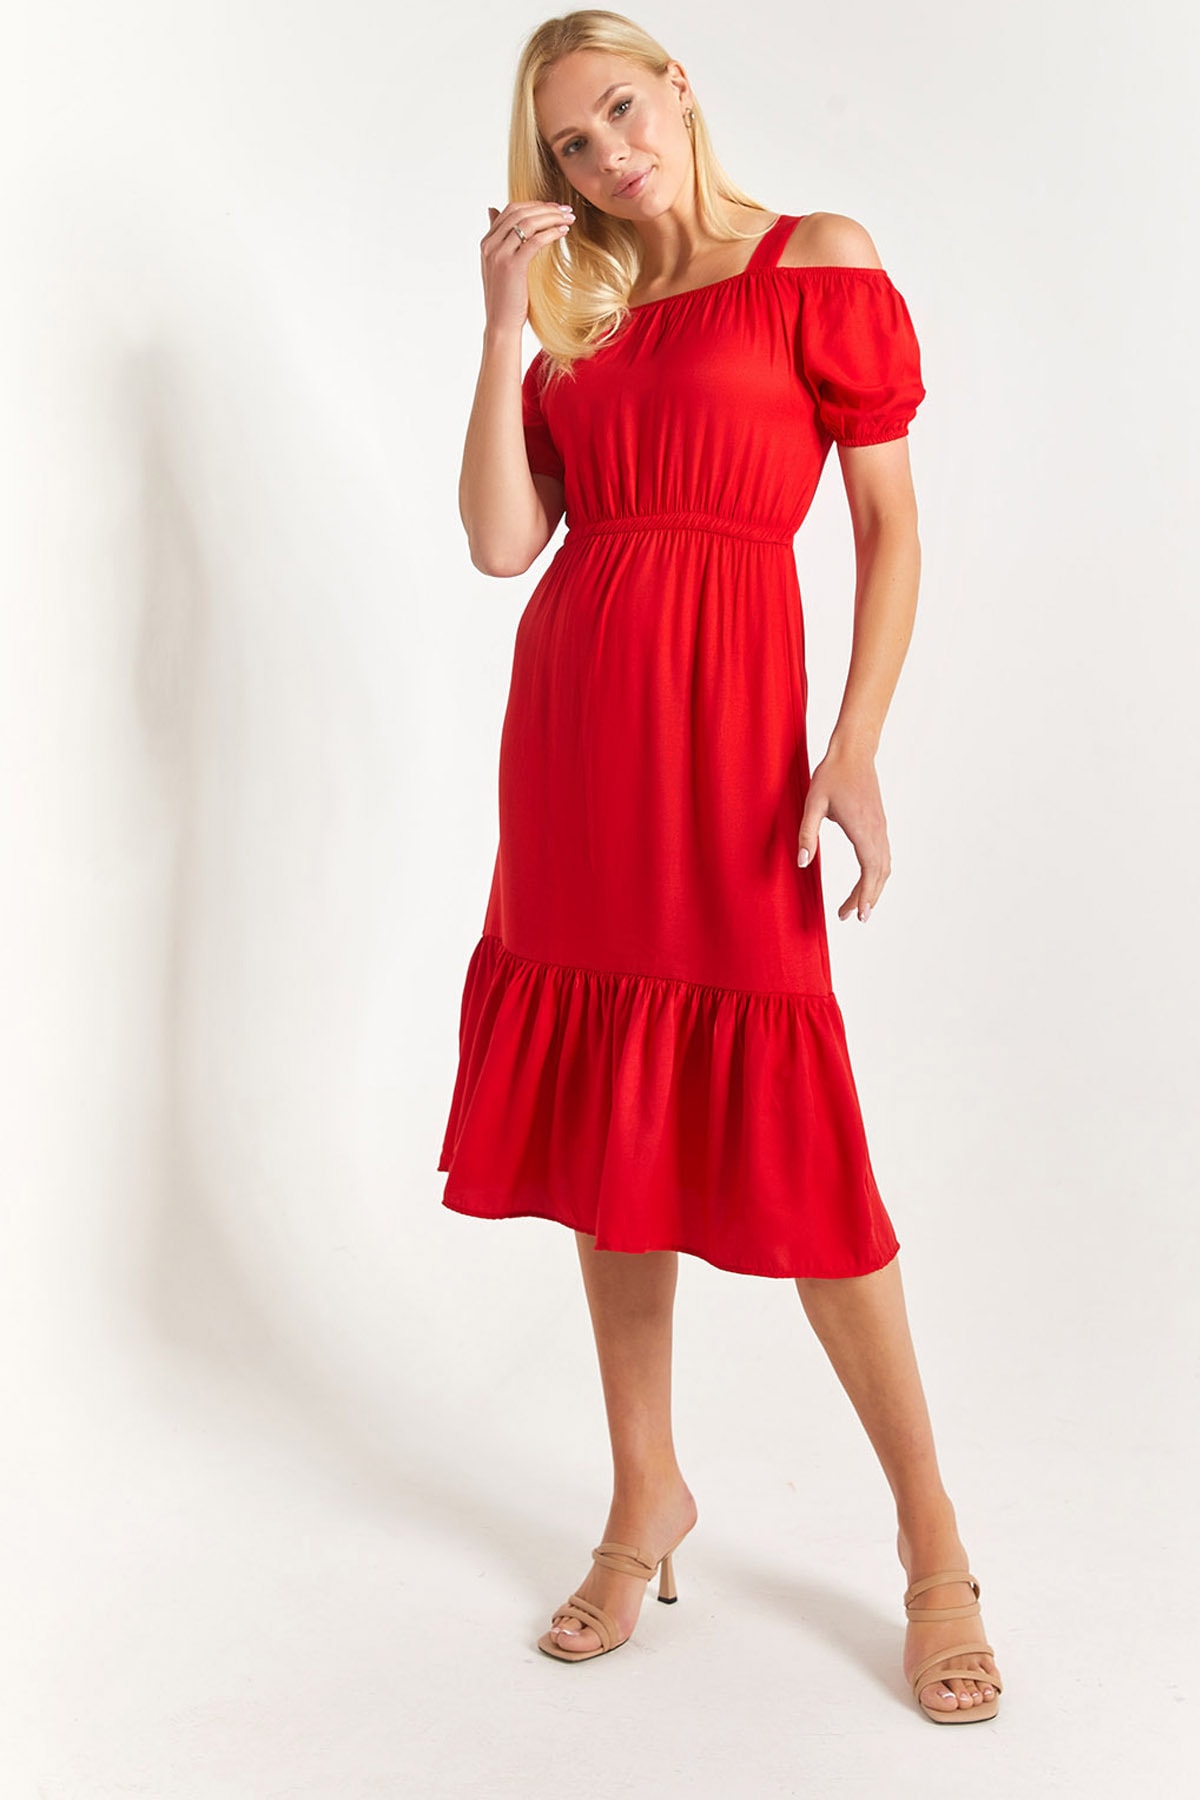 Levně armonika Women's Red Strapless Dress with Elastic Waist